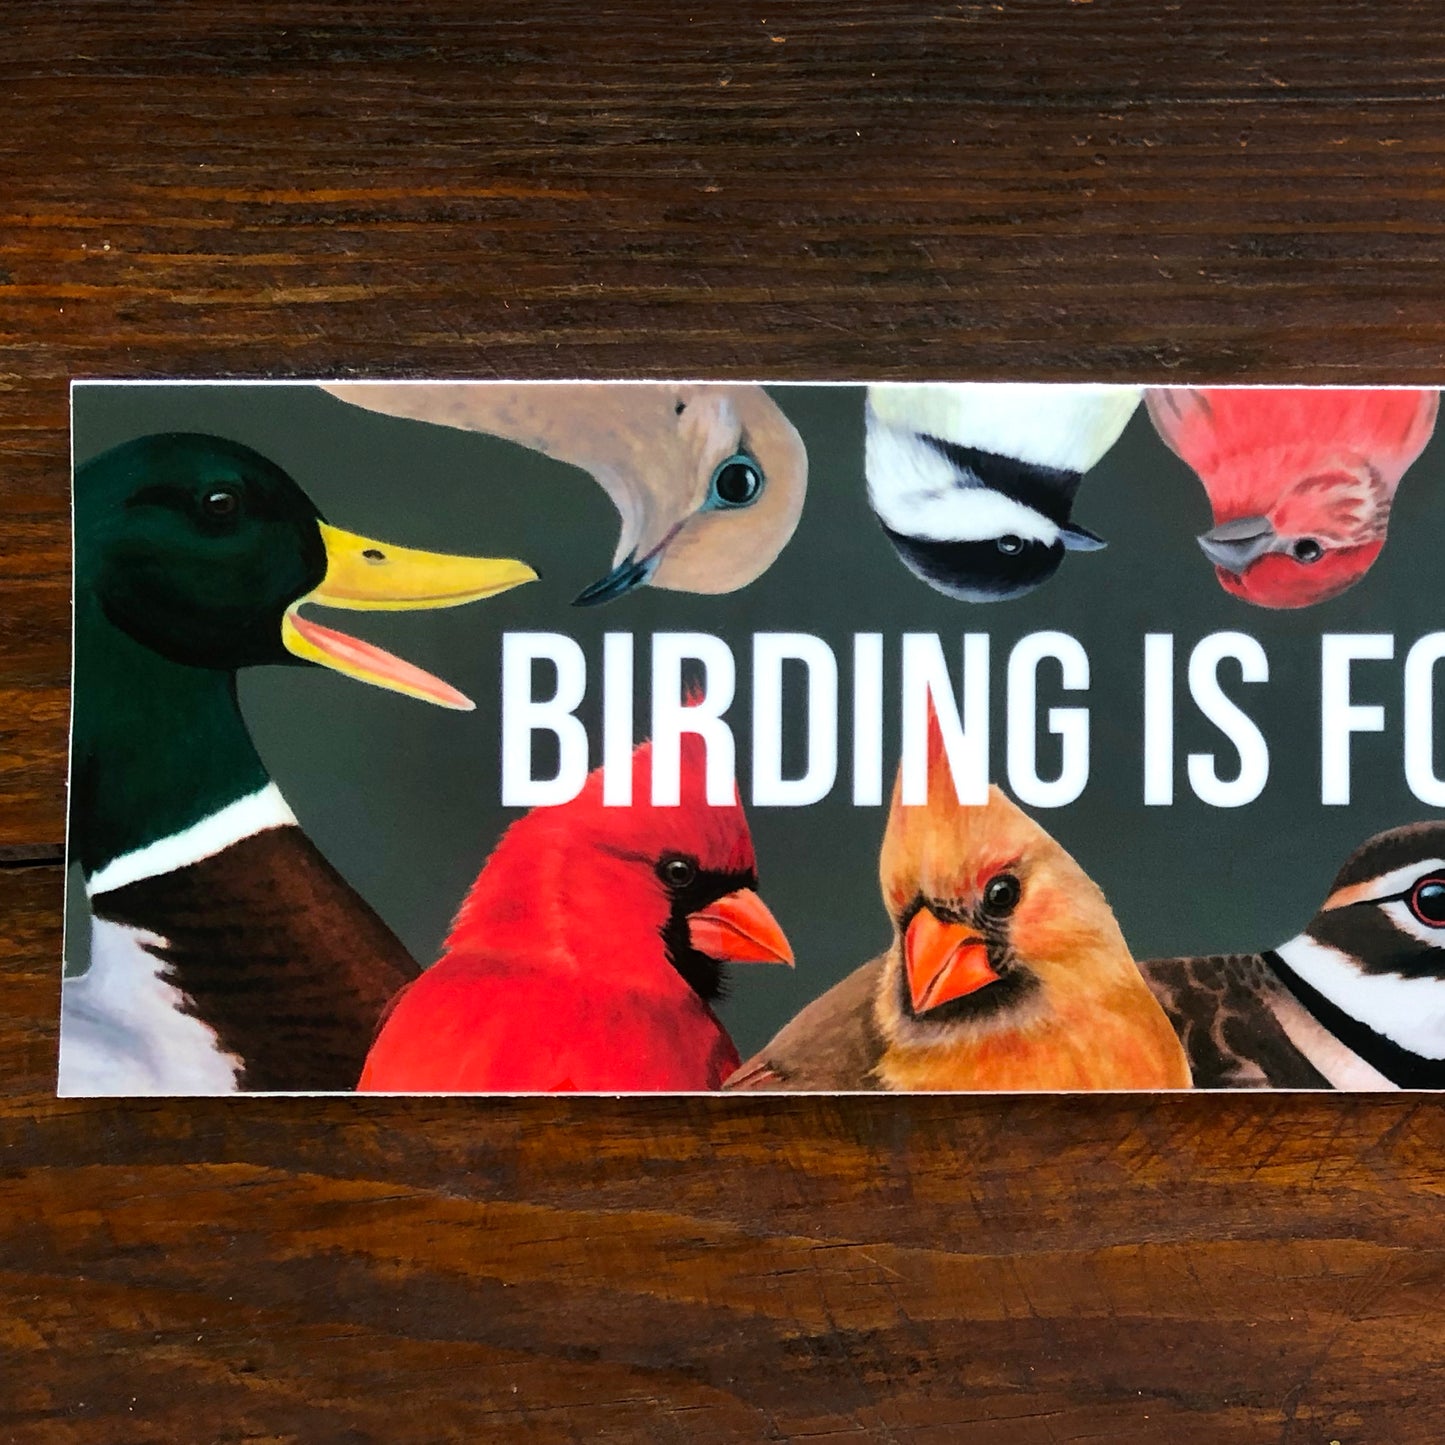 Birding is for Everyone | Bumper Sticker